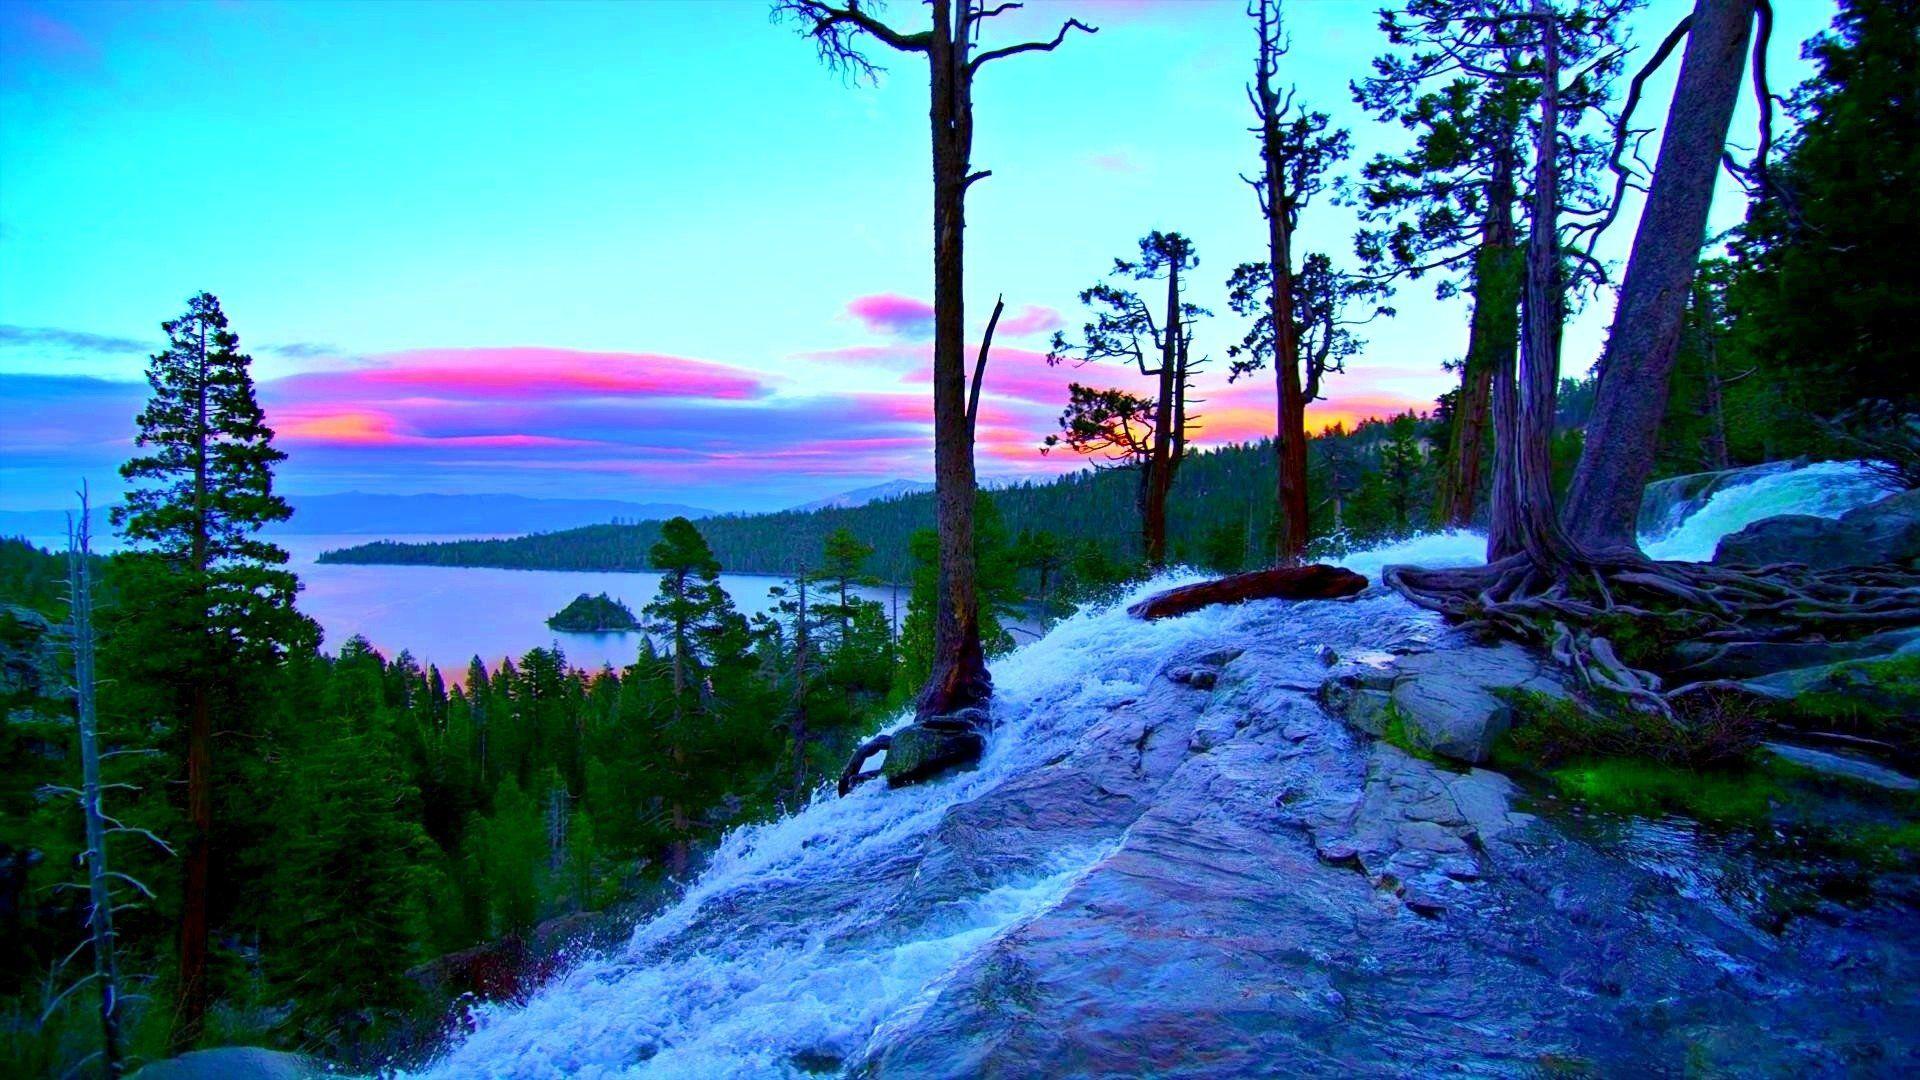 Hình nền HD 1920x1080 Winter Sunset over Mountain Lake.  Tiểu sử